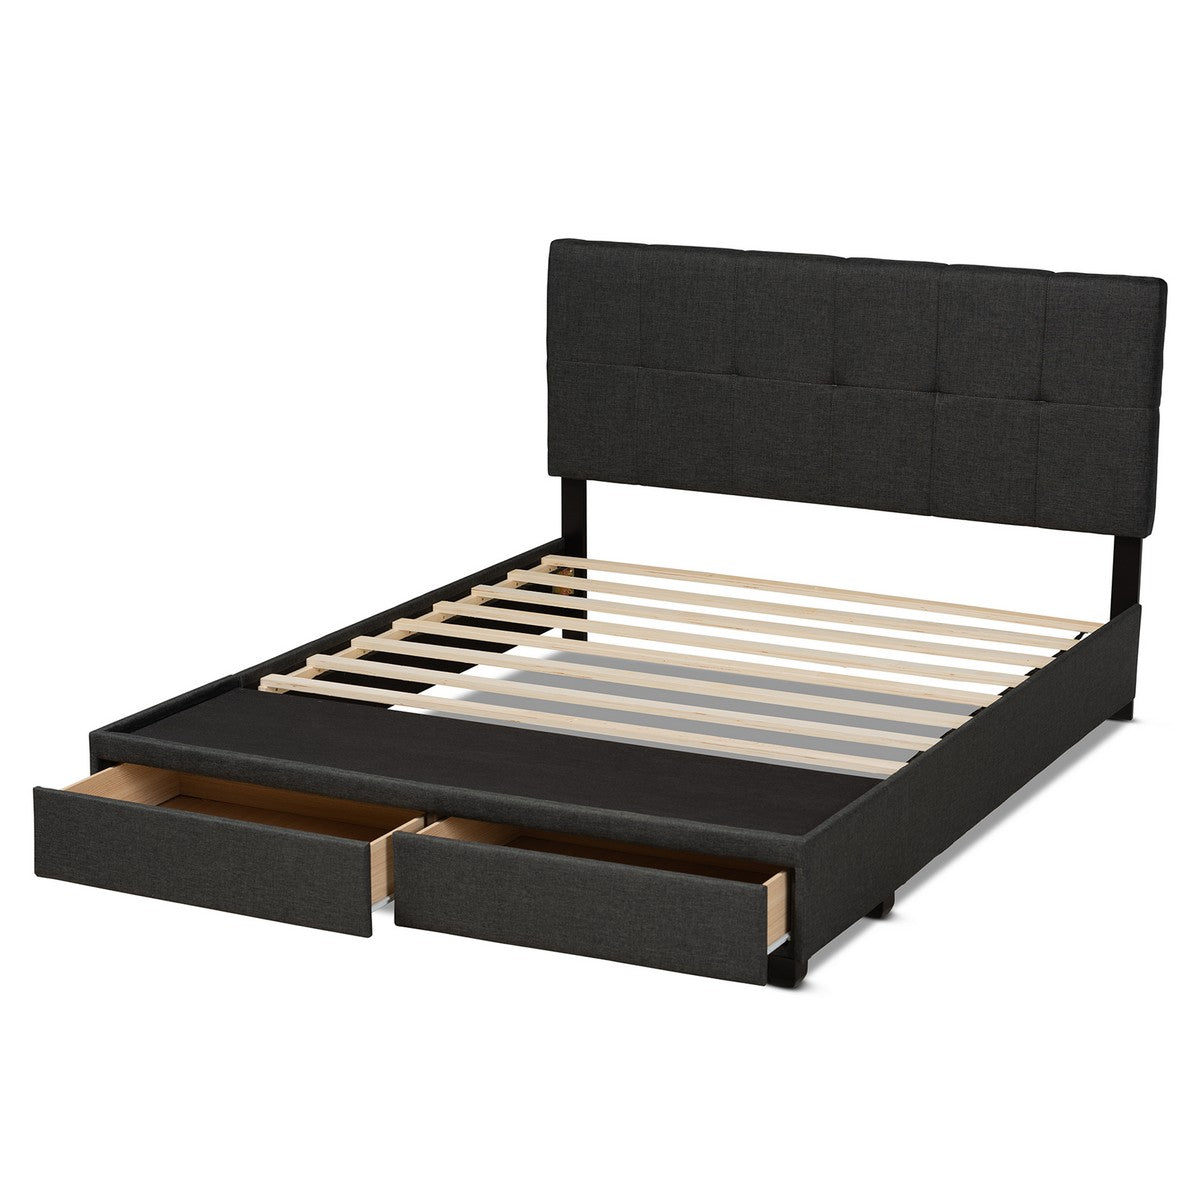 Baxton Studio Netti Dark Grey Fabric Upholstered 2-Drawer King Size Platform Storage Bed